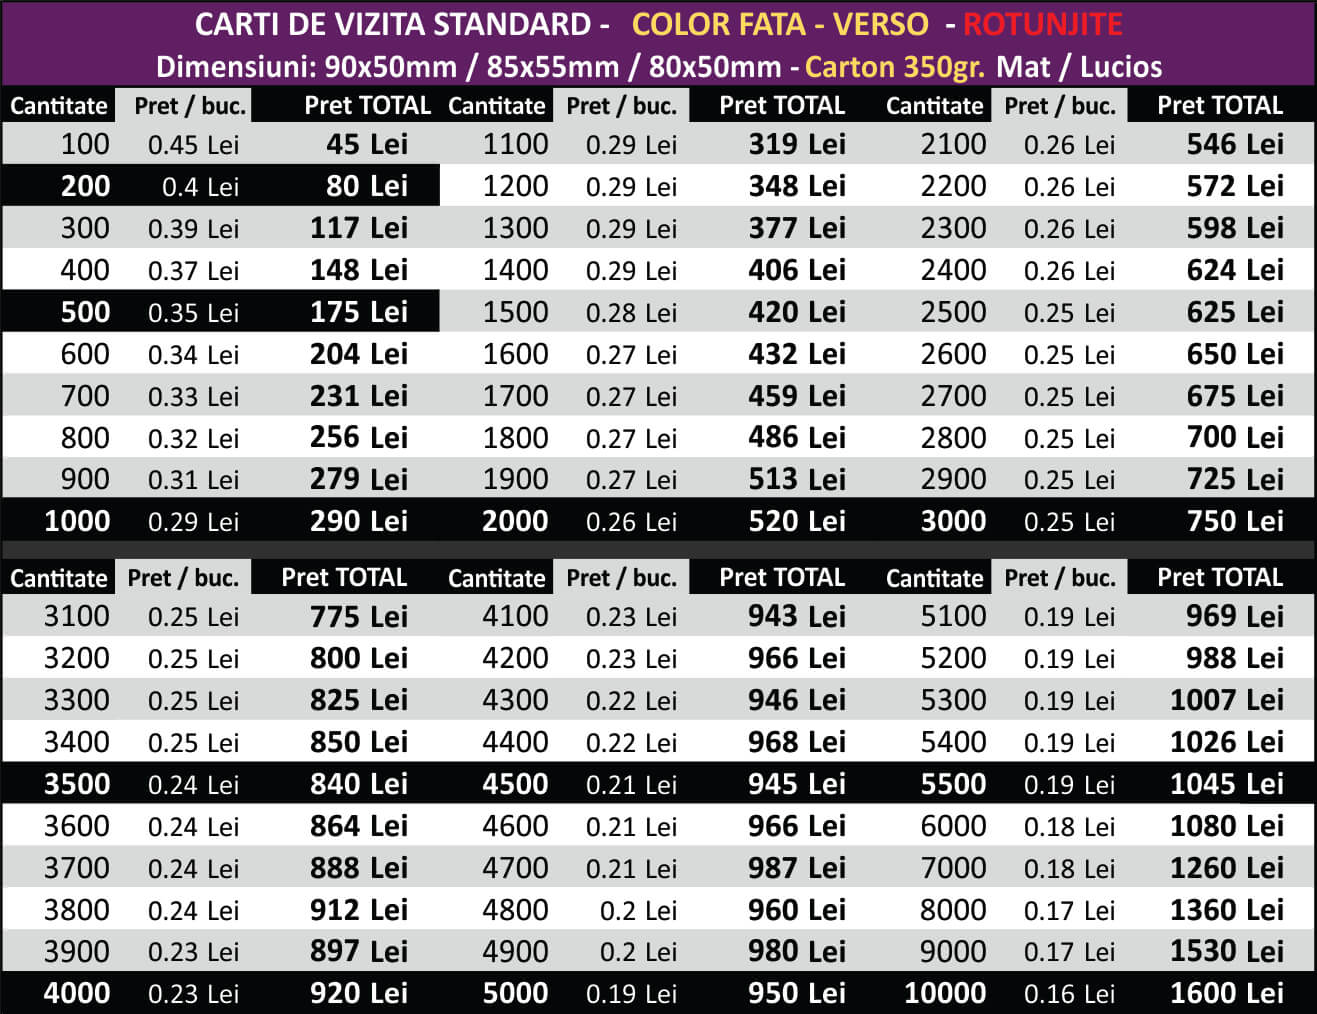 PRETURI Carti de vizita ieftine - ROTUNJITE - Color fata-verso 350gr - CDVi